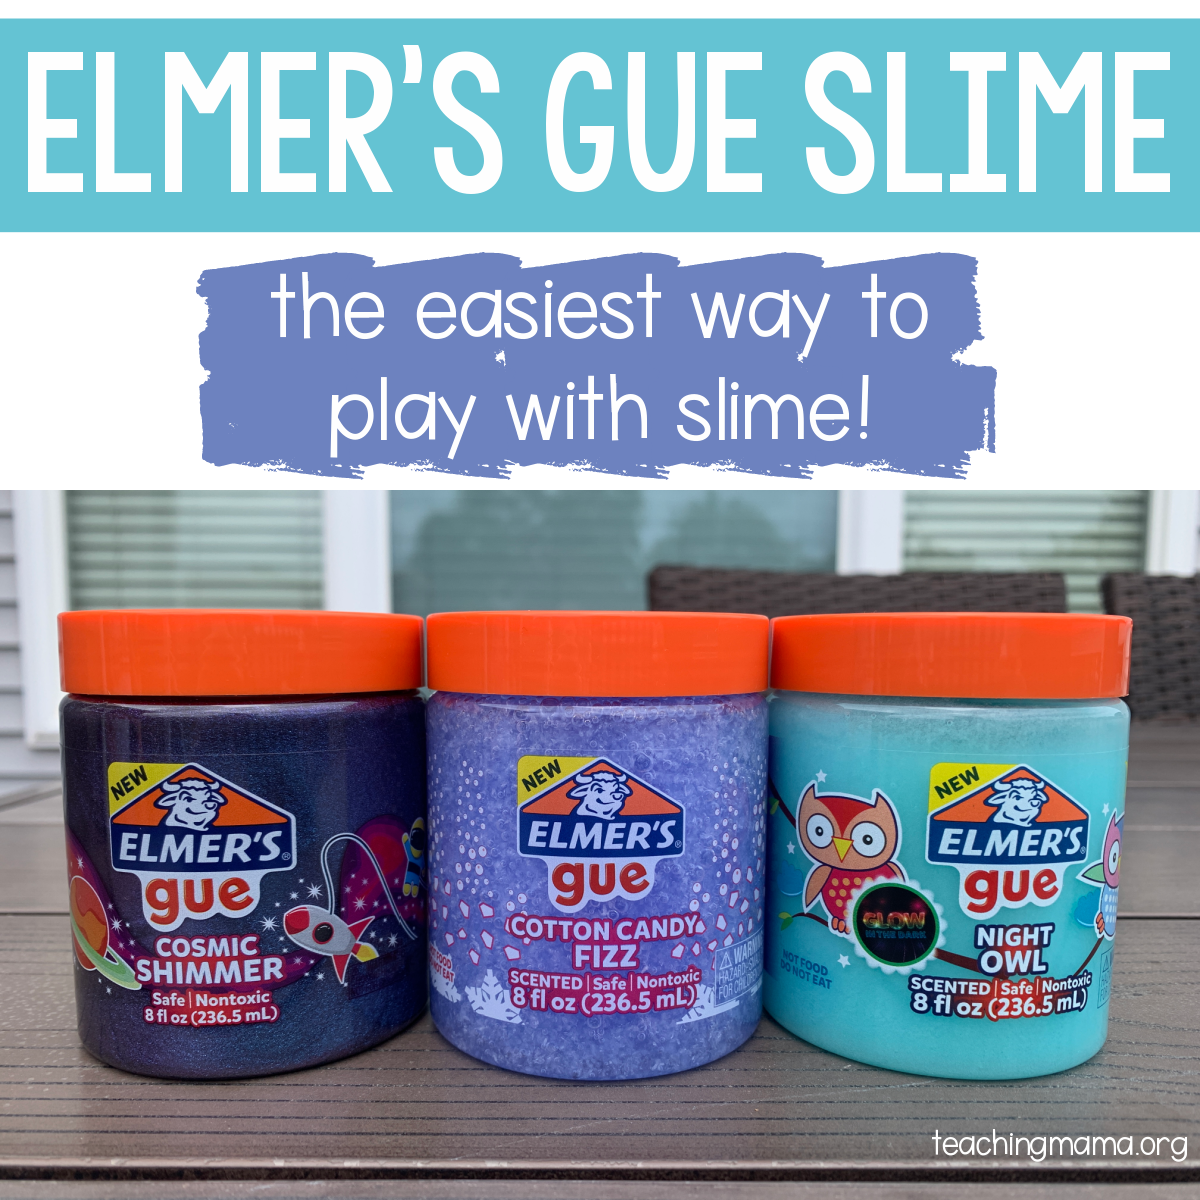 NEW ELMER'S GLUE COSMIC GLUE!! - MIXING ALL OUR ELMER'S GLUE